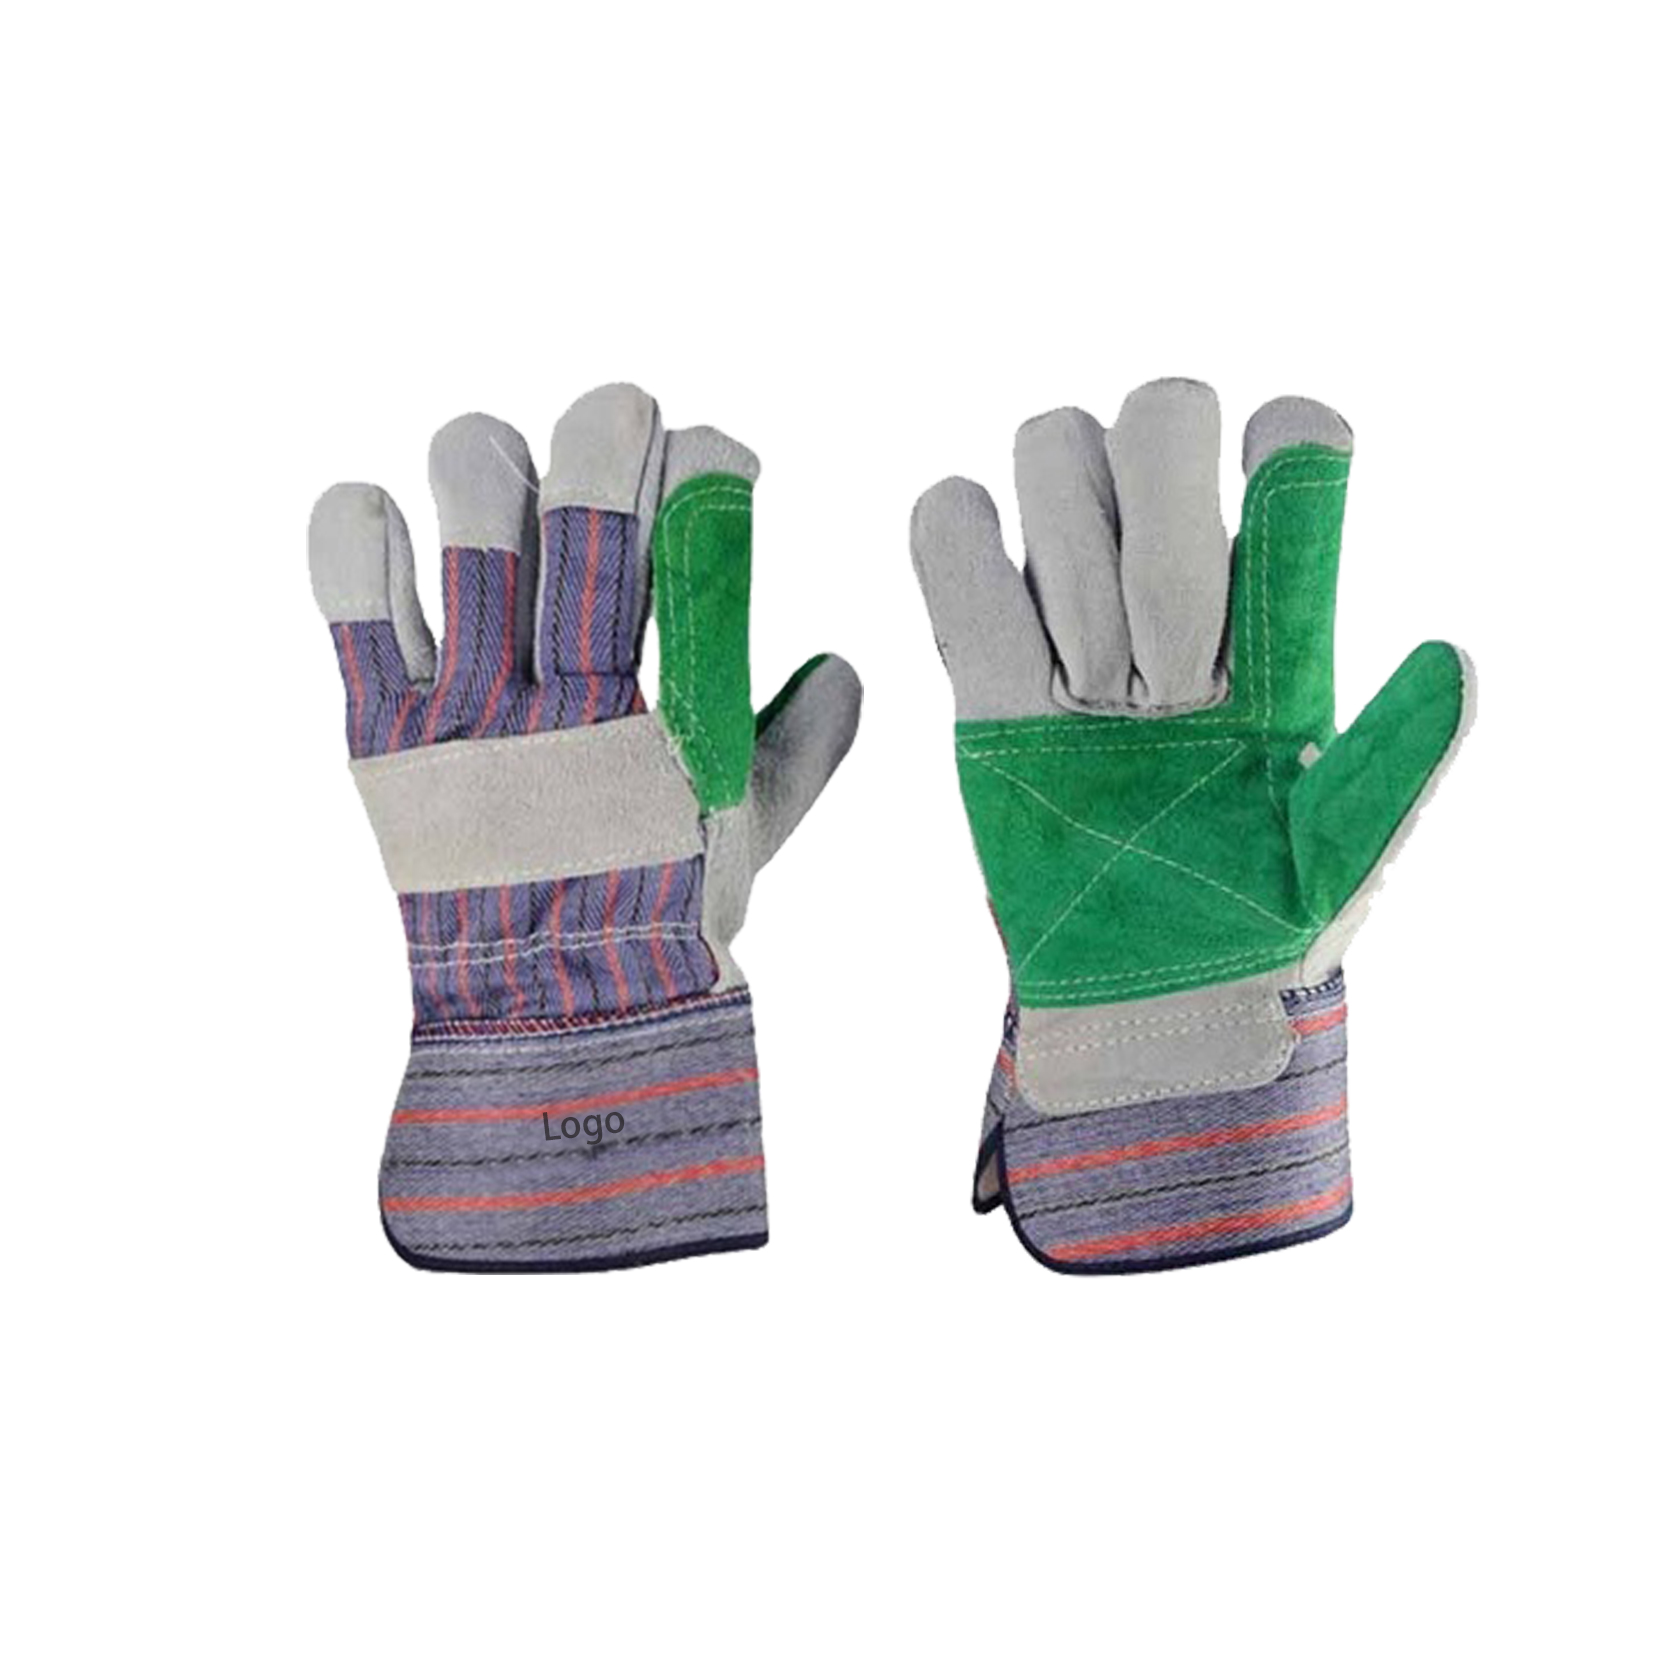 Safety Leather Work Gloves Men, Gardening Gloves, Rigger Gloves, Builder Gloves